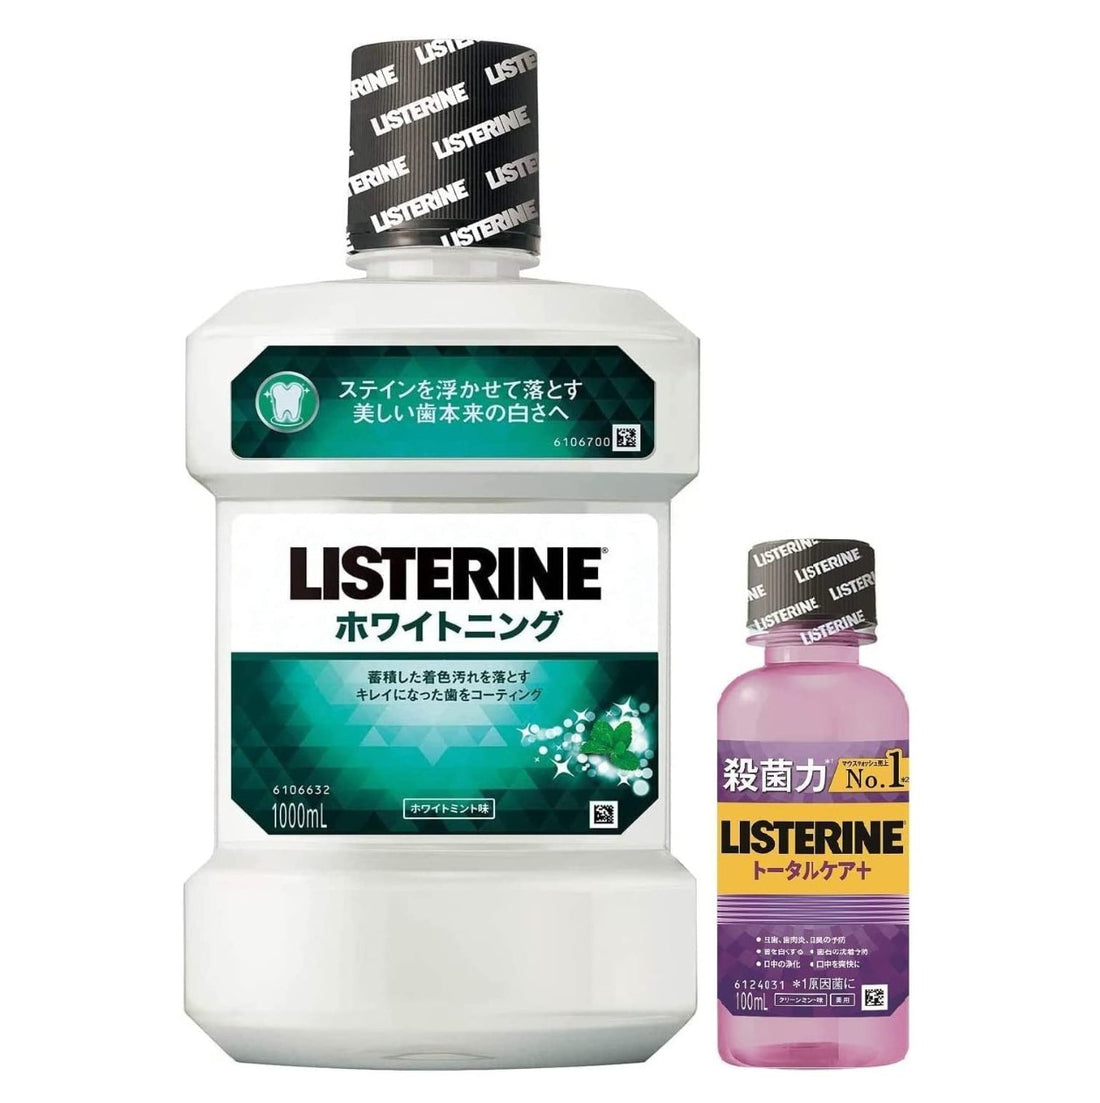 LISTERINE Listerine Whitening 1000ml + 100ml with bonus Mouthwash Home Whitening Quasi-drug Medicinal - NihonMura